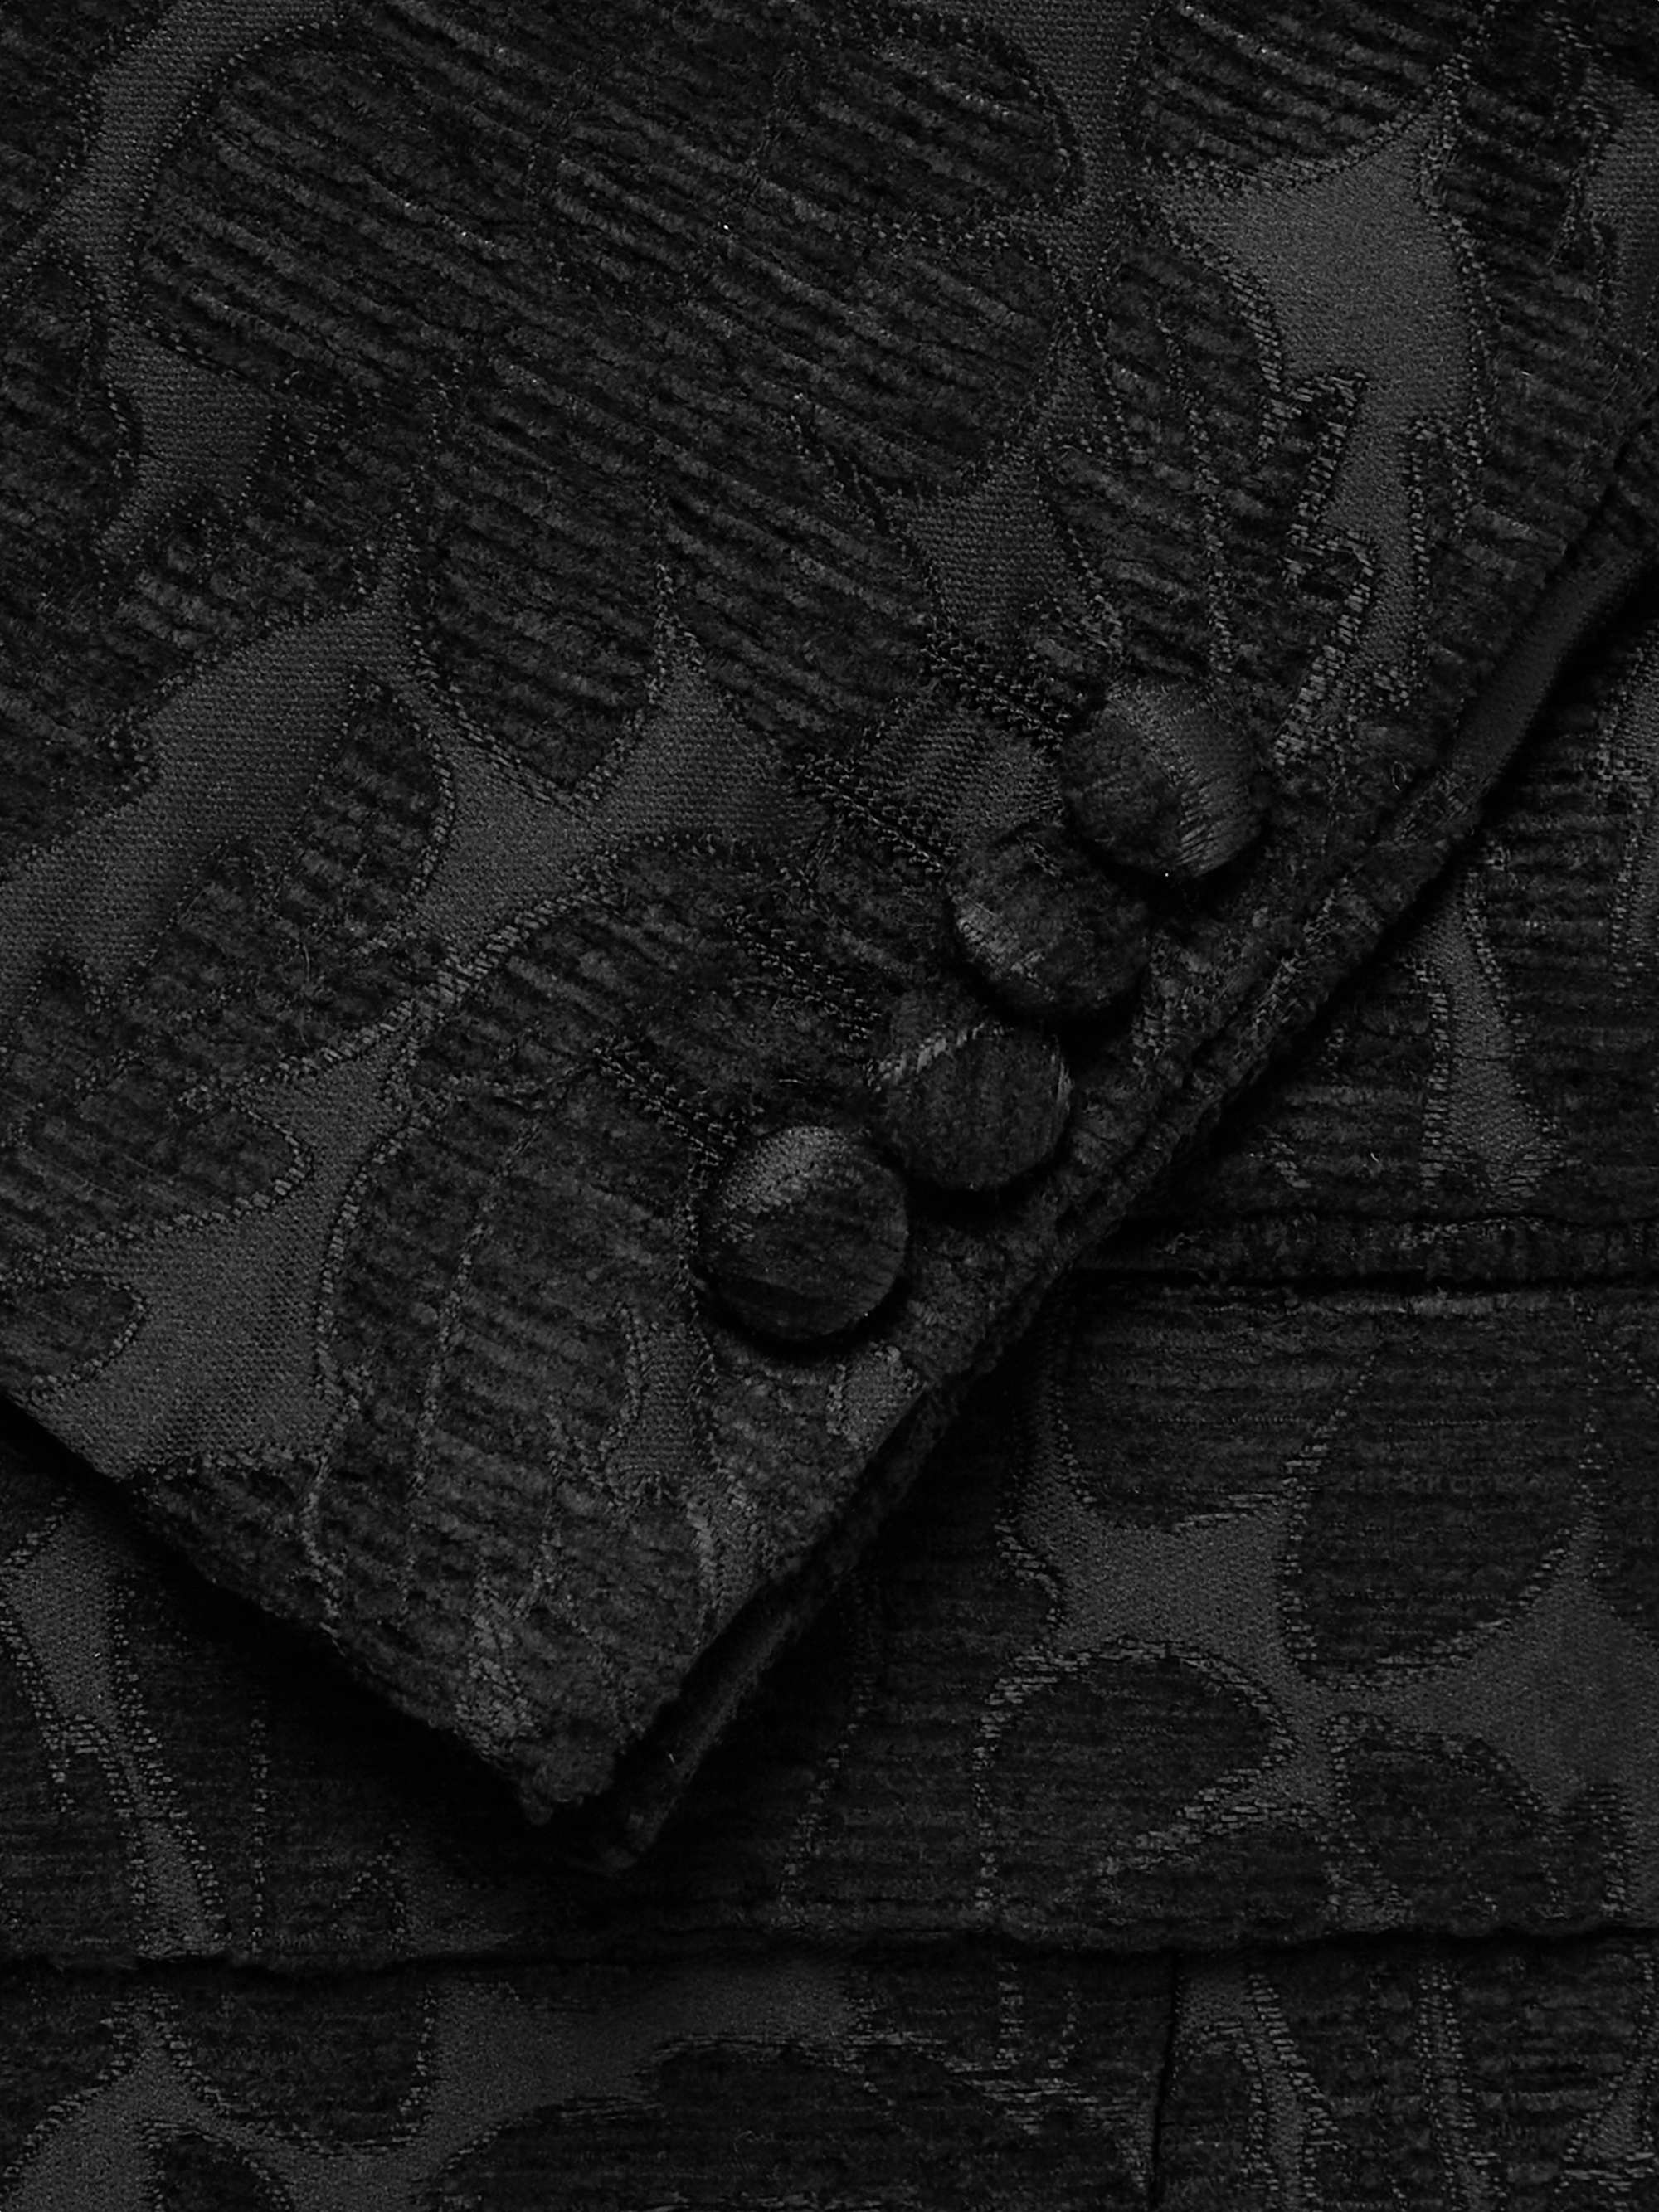 ETRO Paisley-Jacquard Woven Tuxedo Jacket for Men | MR PORTER